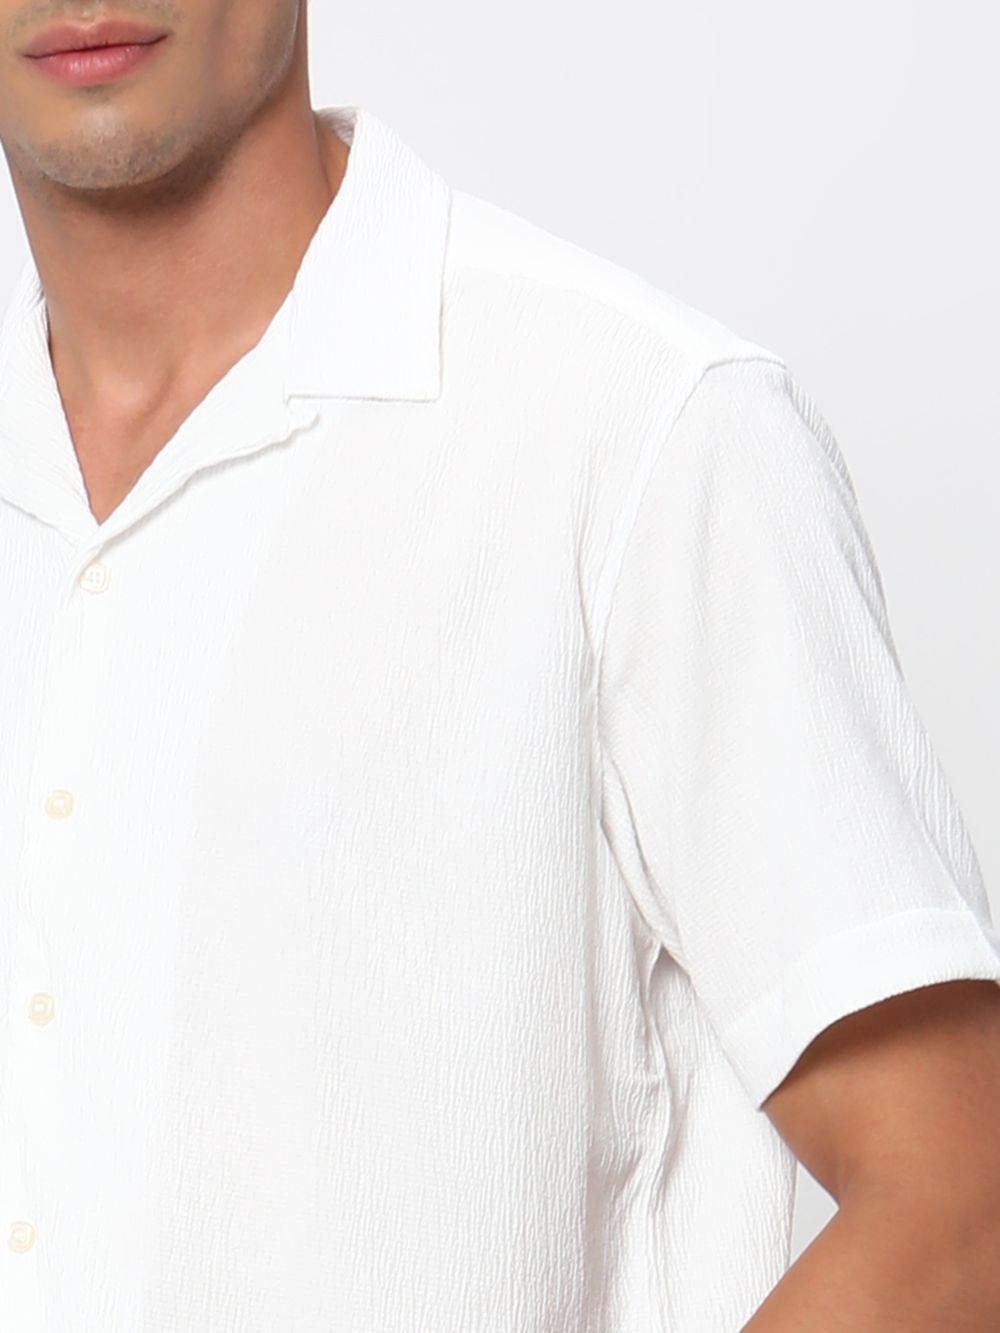 White Textured Plain Shirt